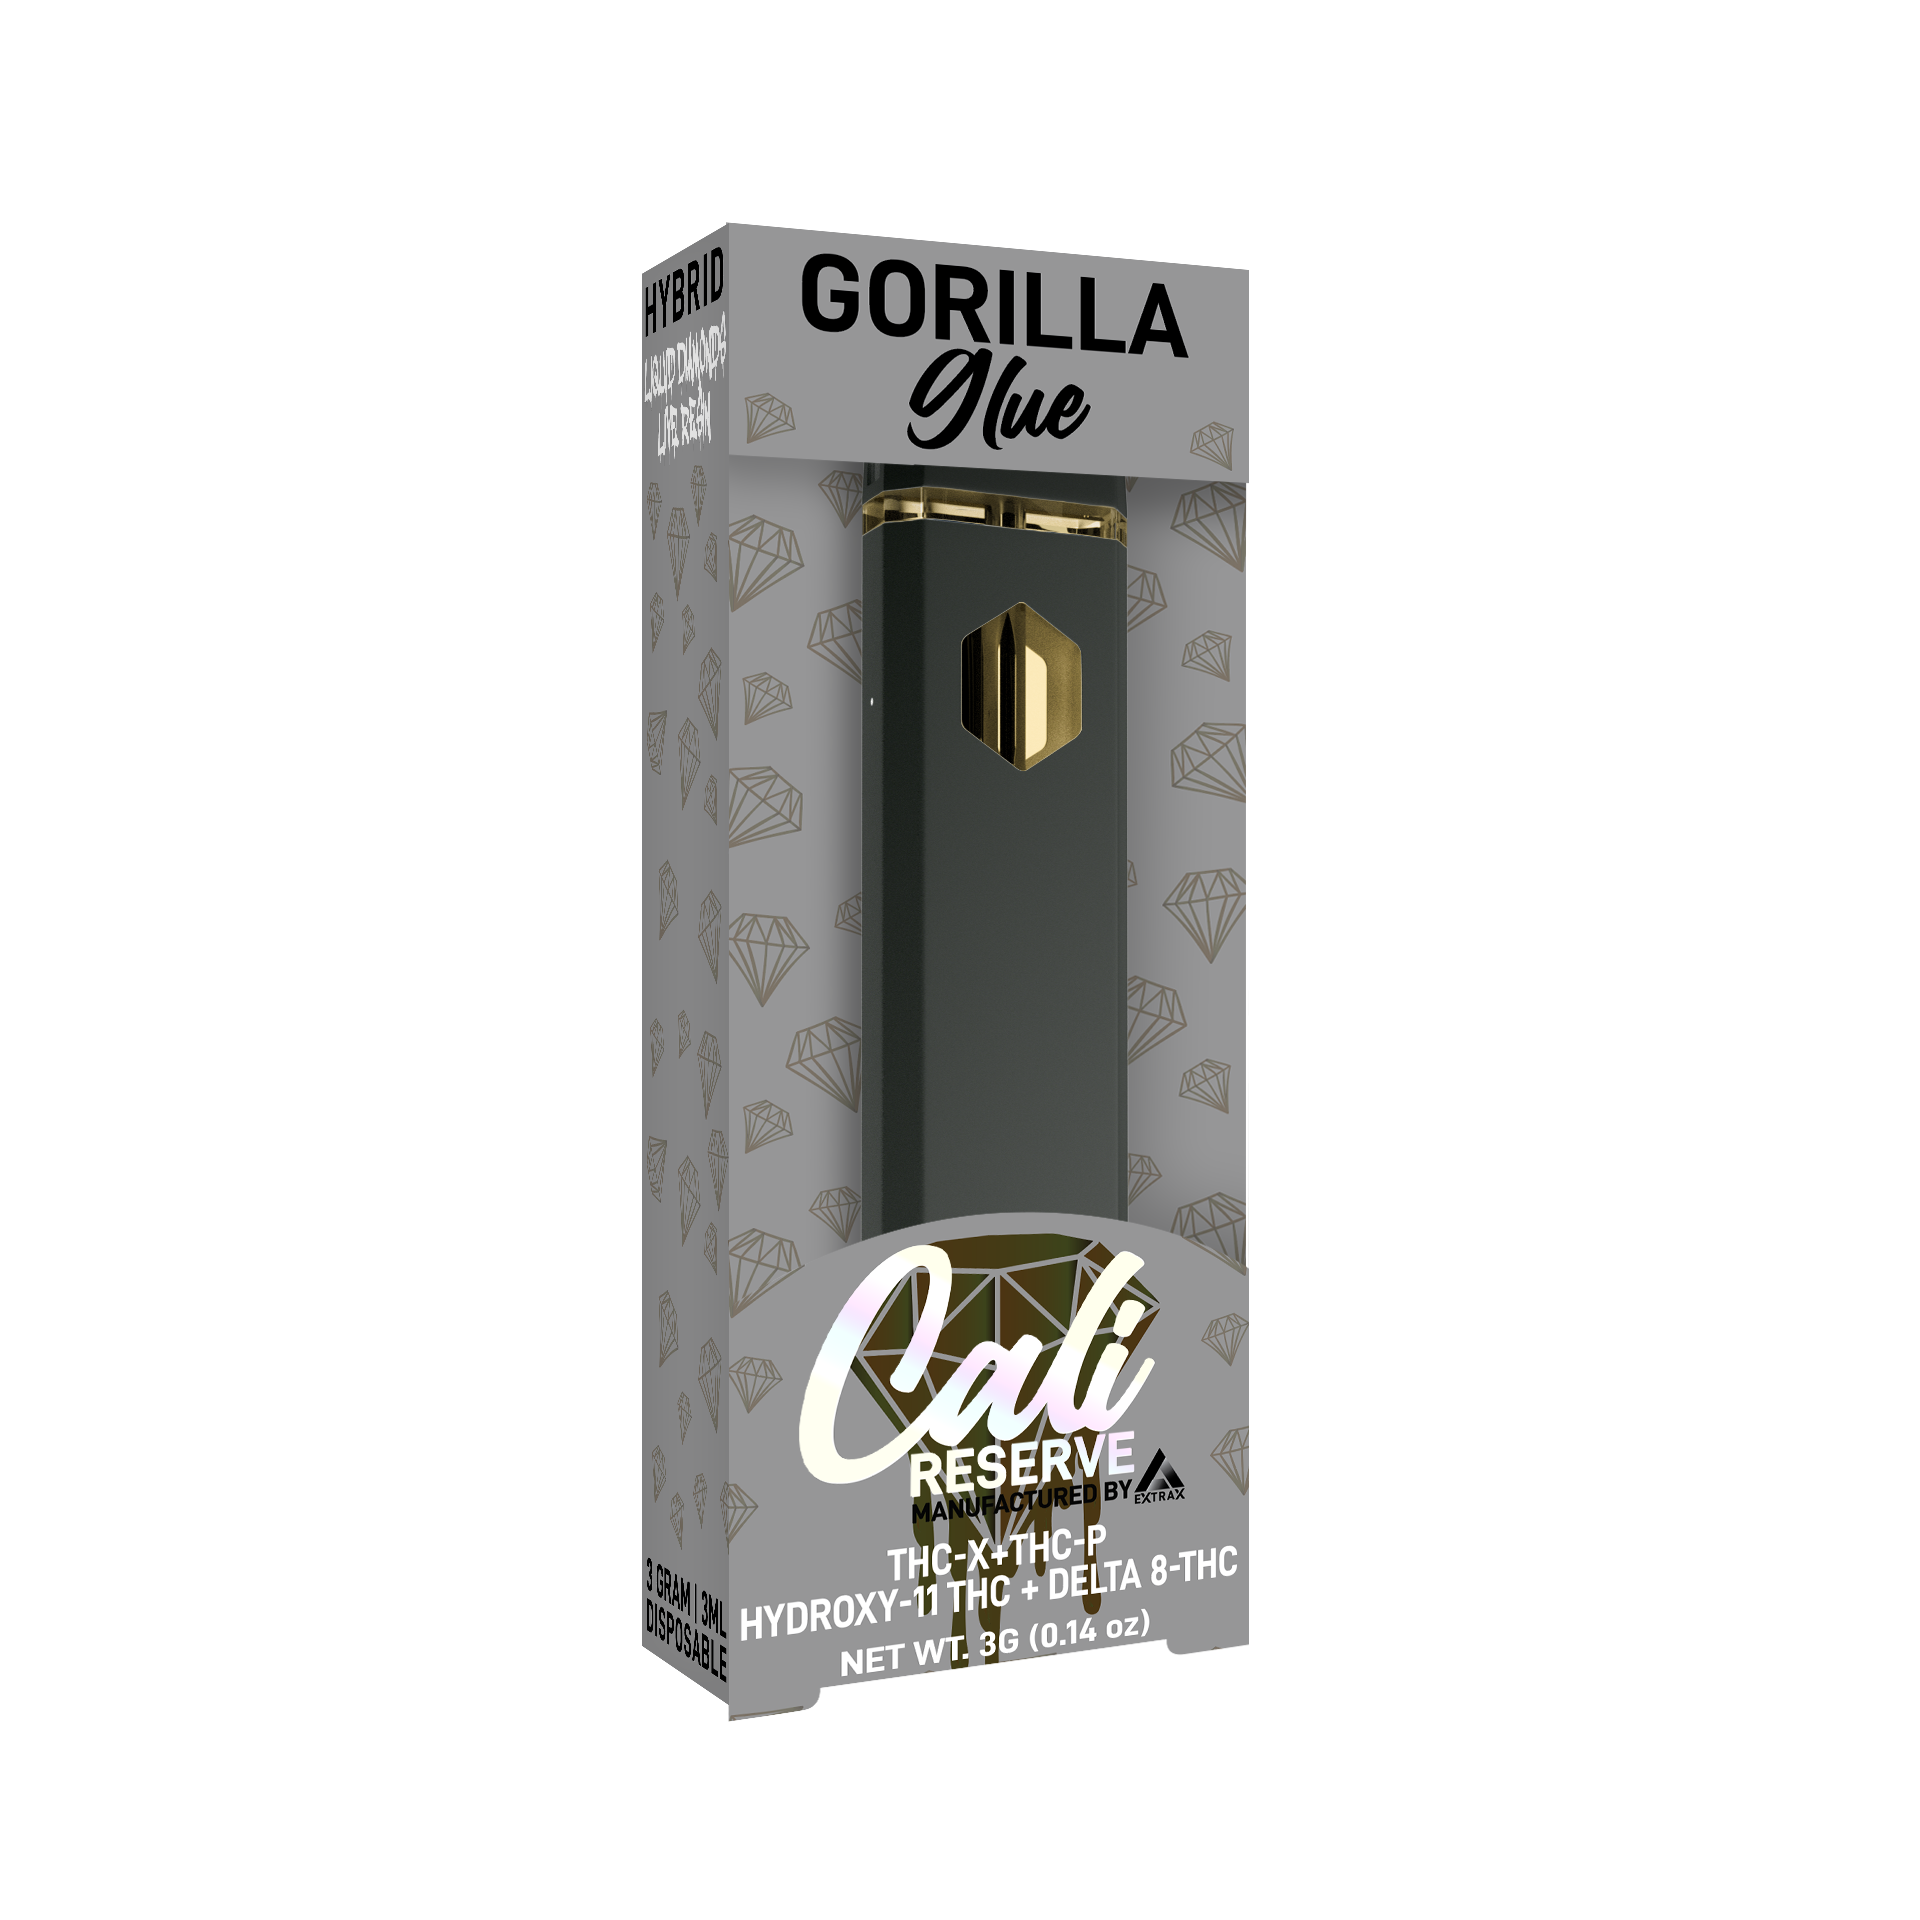 cali extrax - Gorilla Glue Disposable Liquid Diamond 3G - Cali Reserve